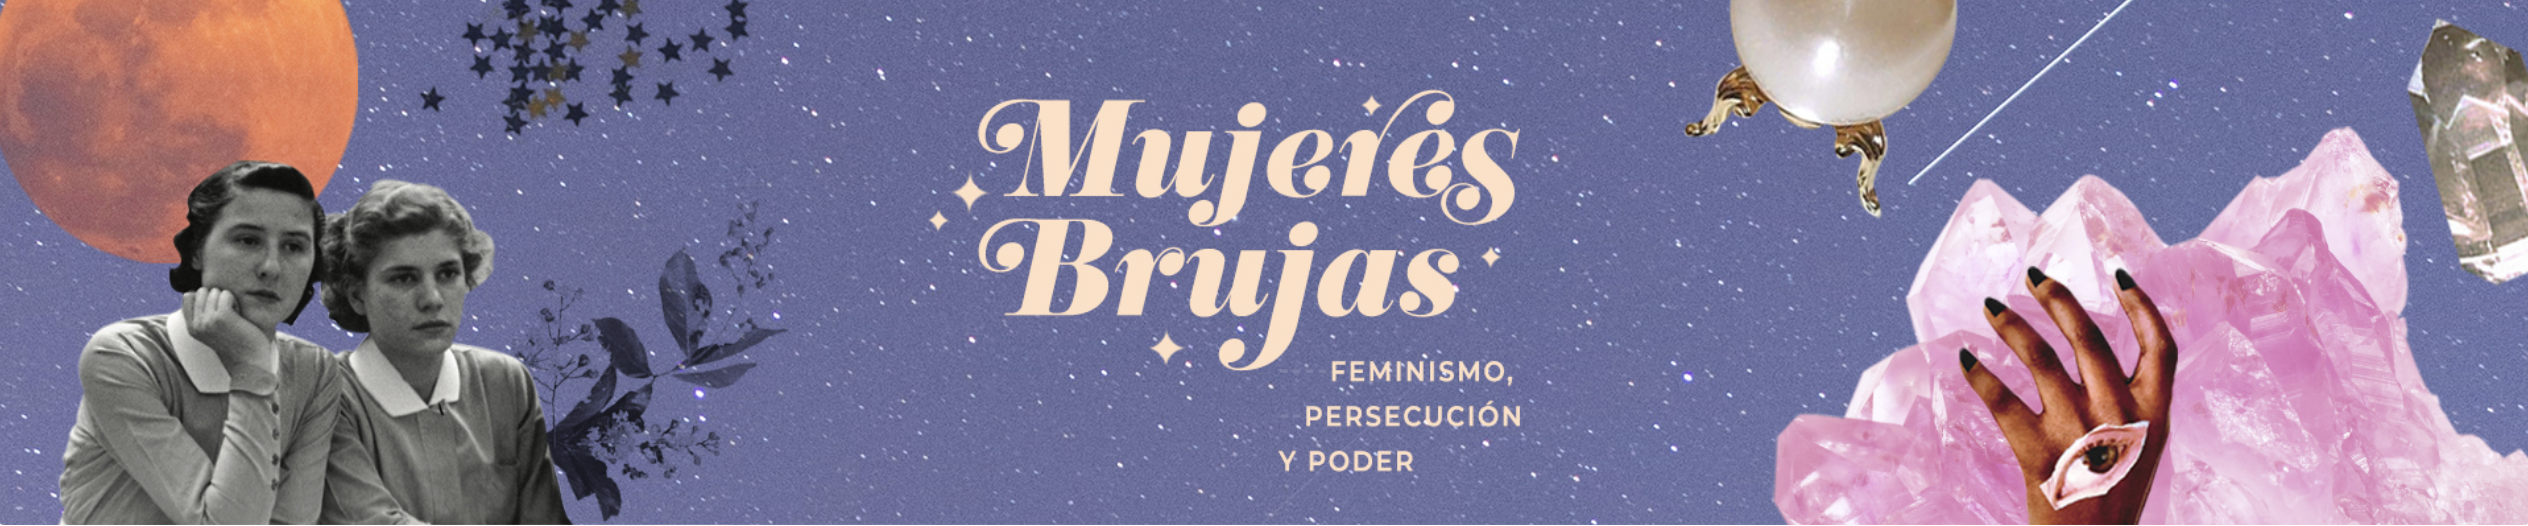 Taller Mujeres Brujas: Feminismo, persecución y poder